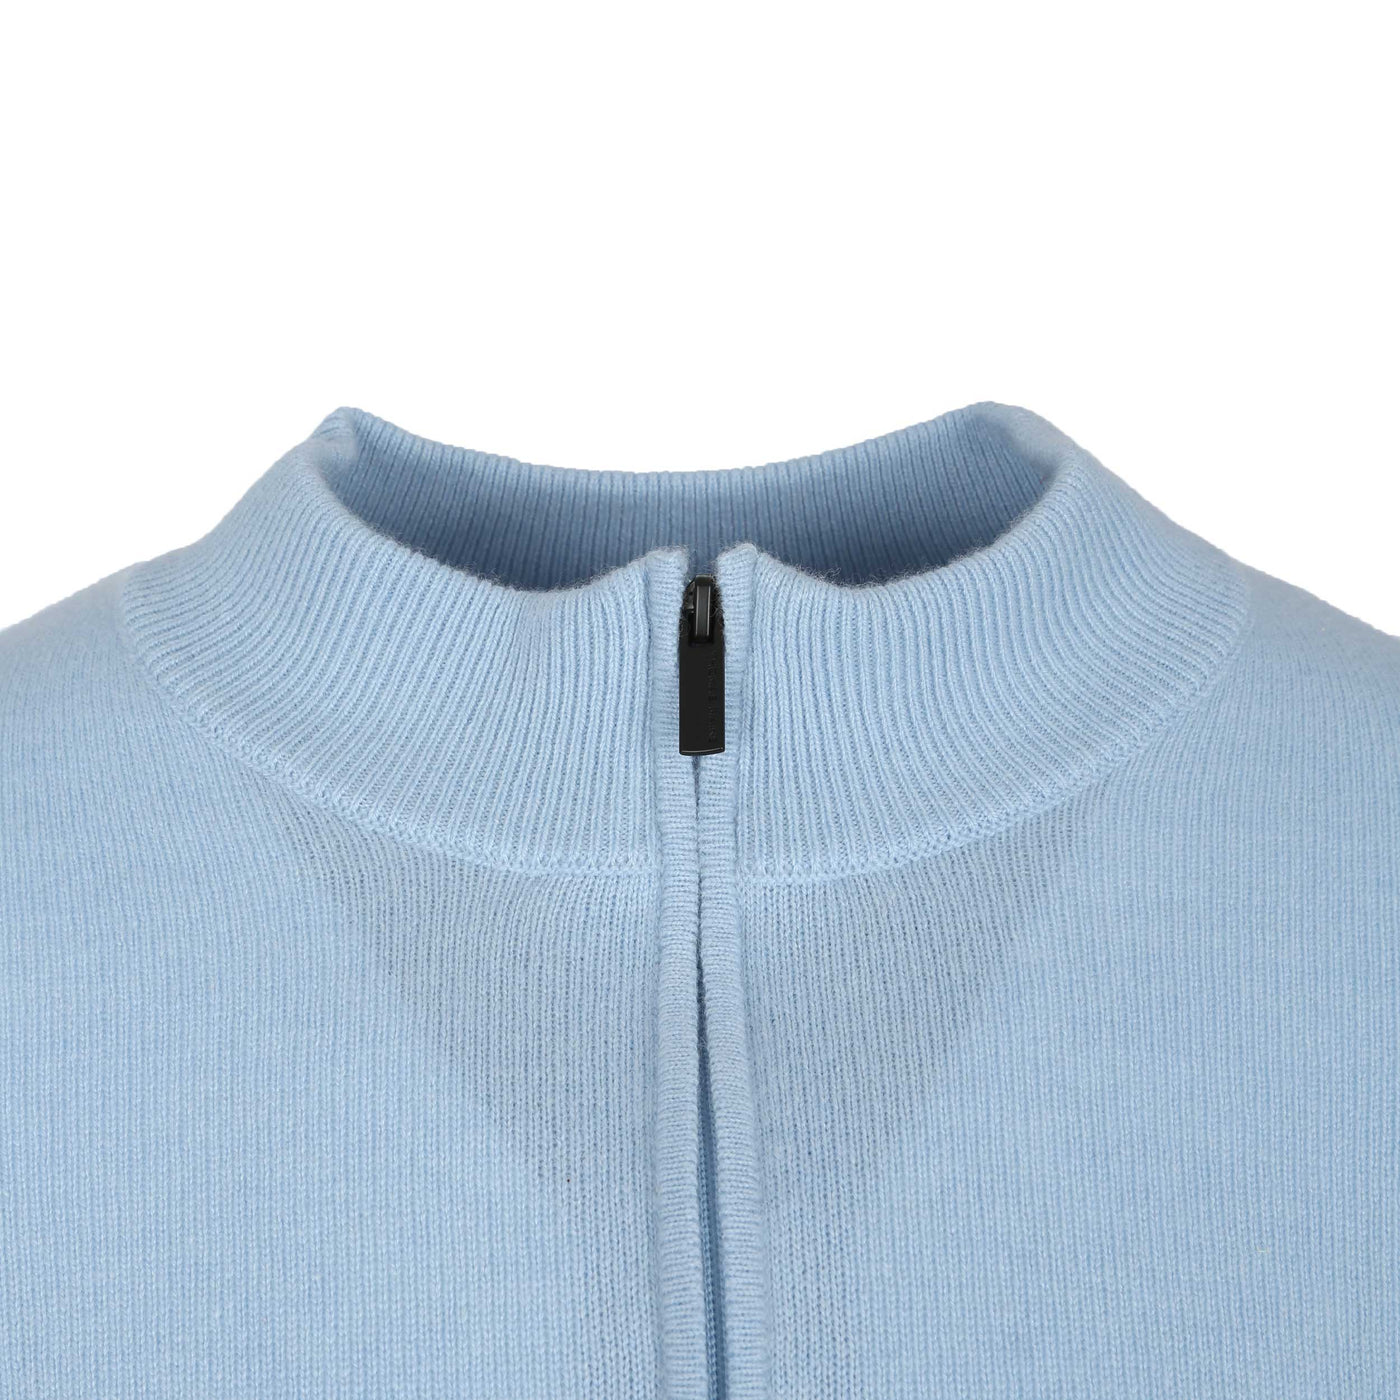 Thomas Maine 1/4 Zip Knitwear in Sky Blue Collar